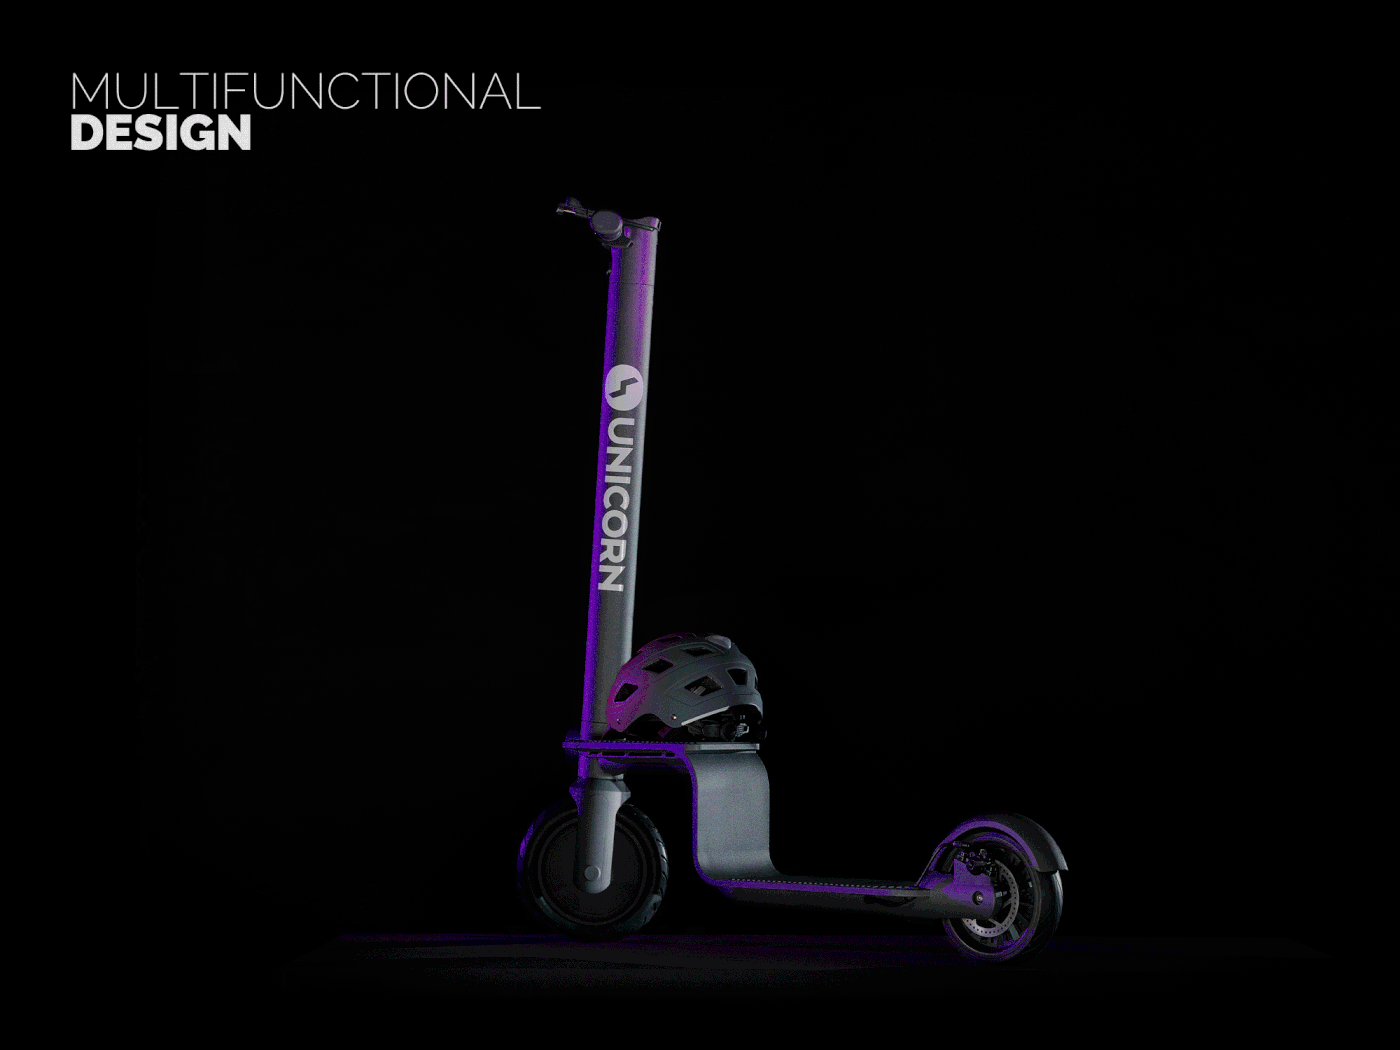 Unicorn踏板车工业设计和品牌VI设计